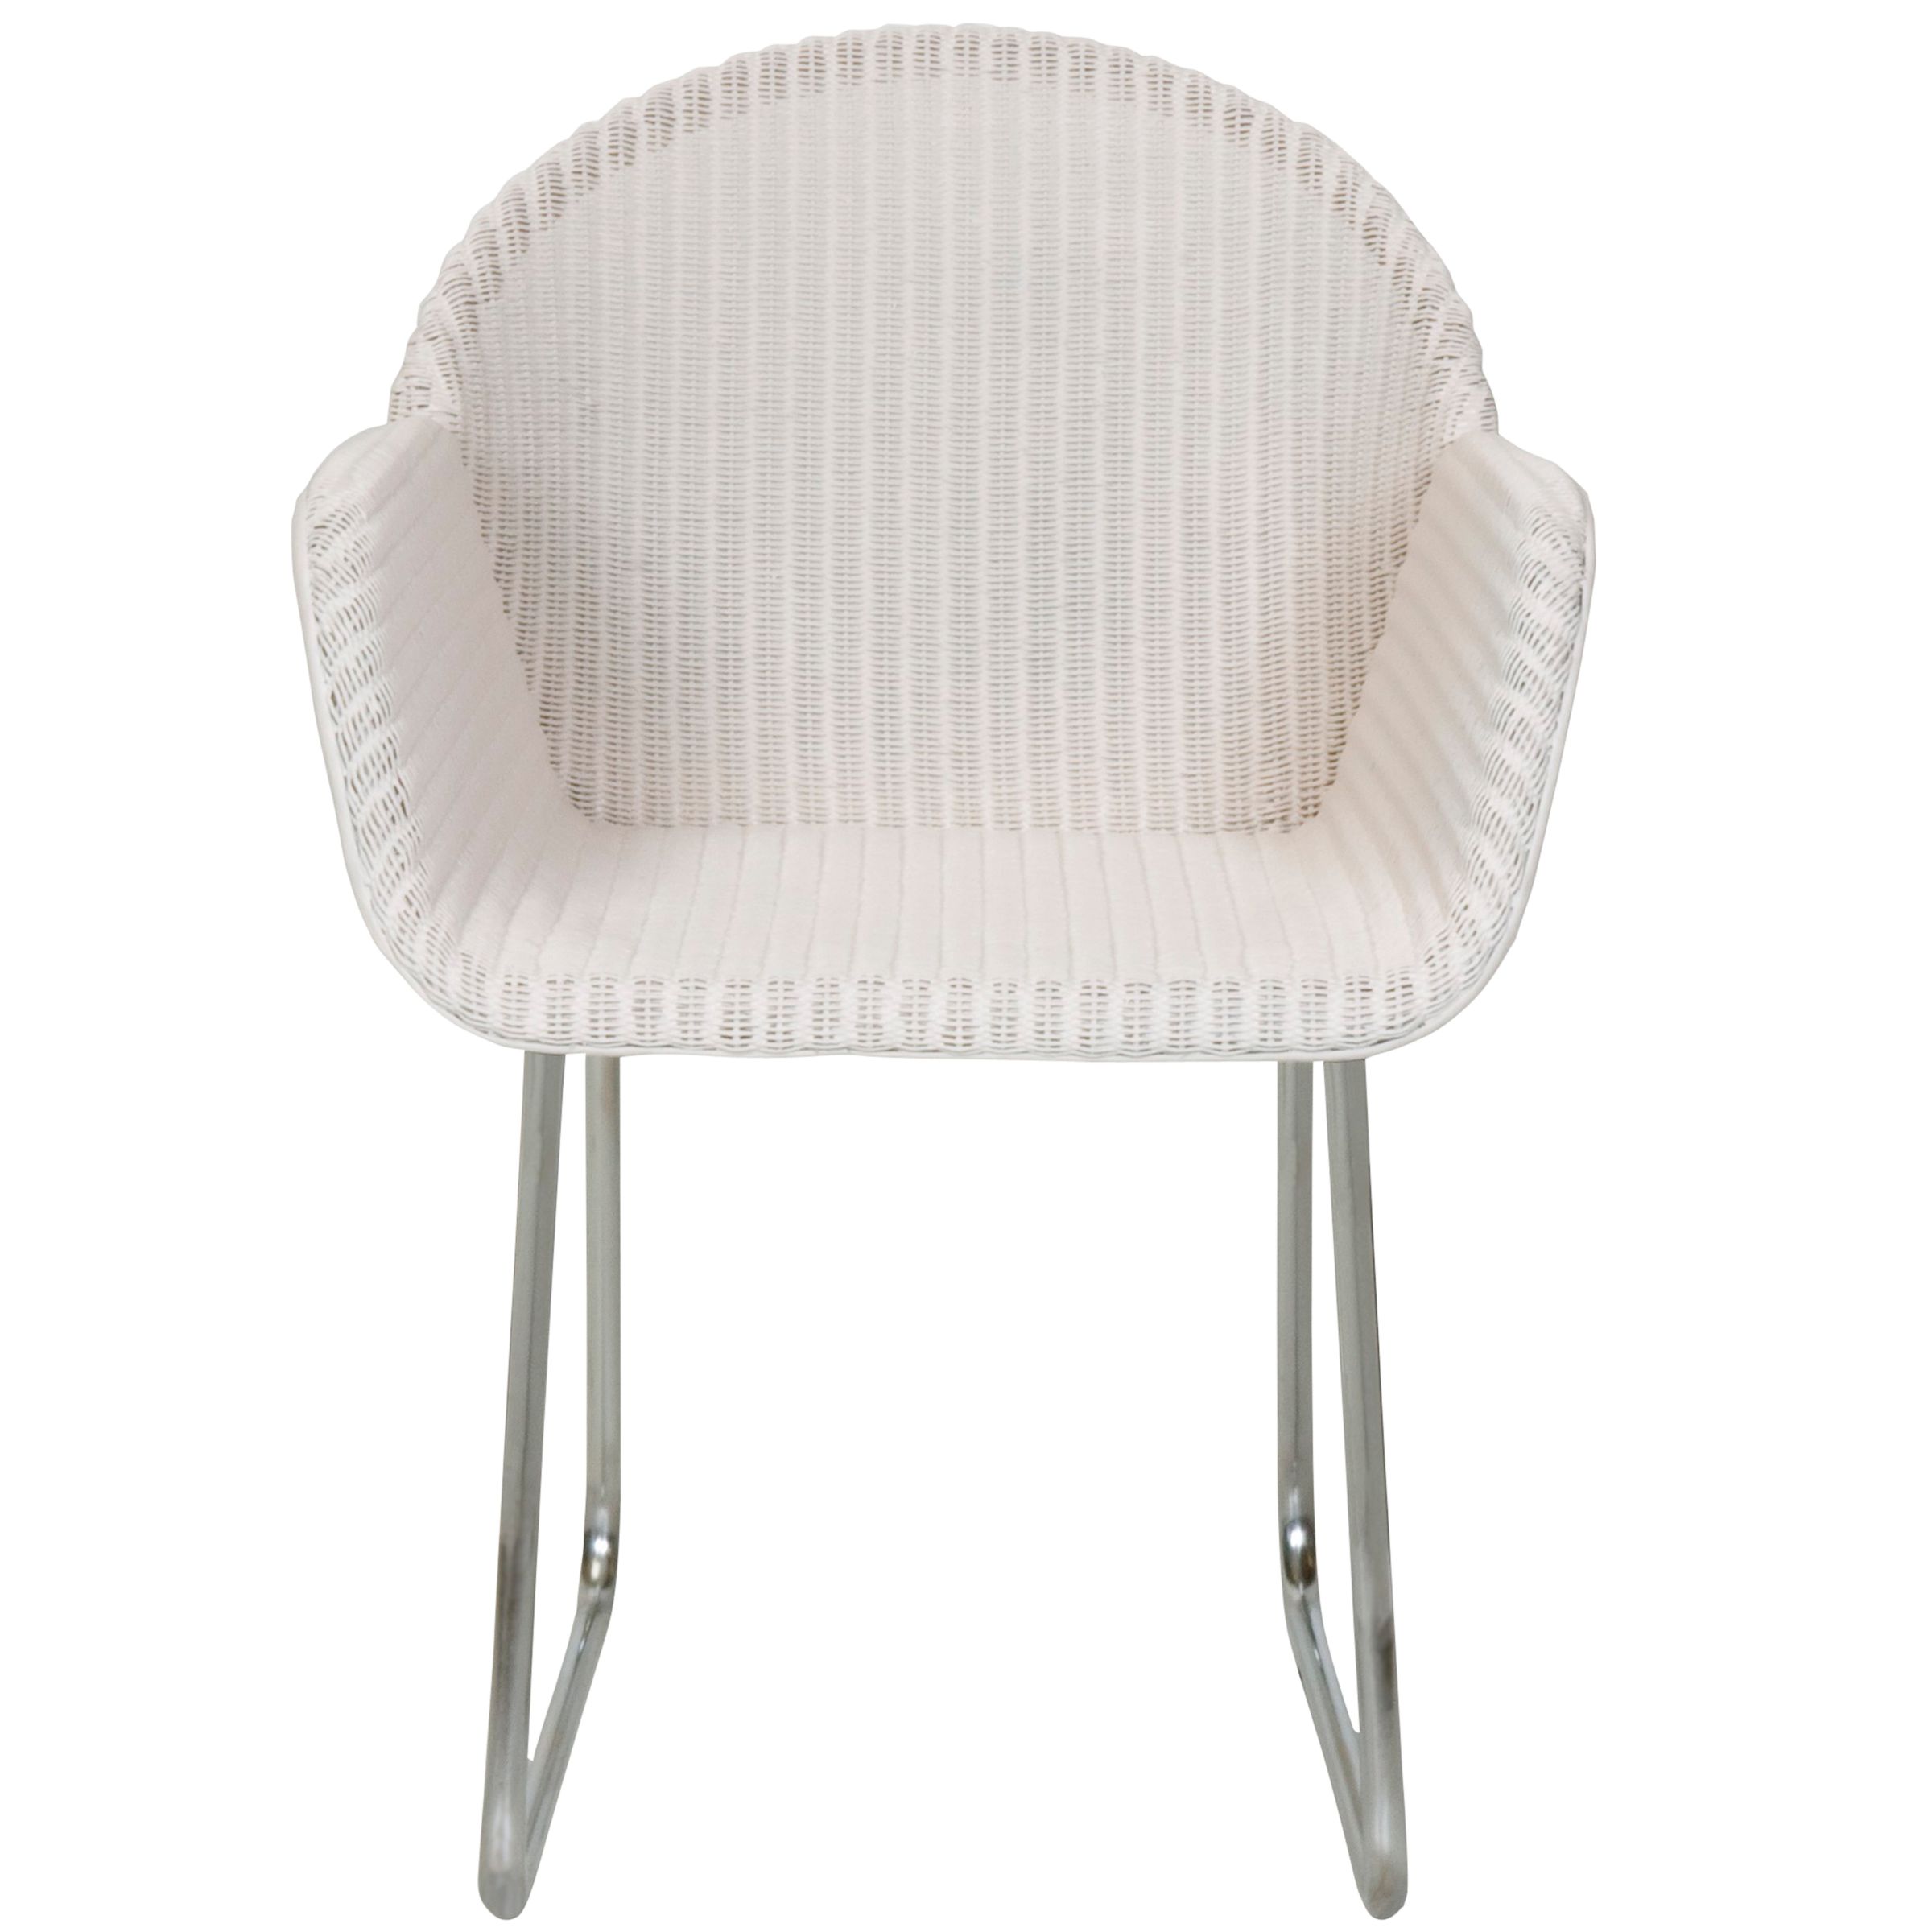 John Lewis Golf Cane Dining Chair, Cream